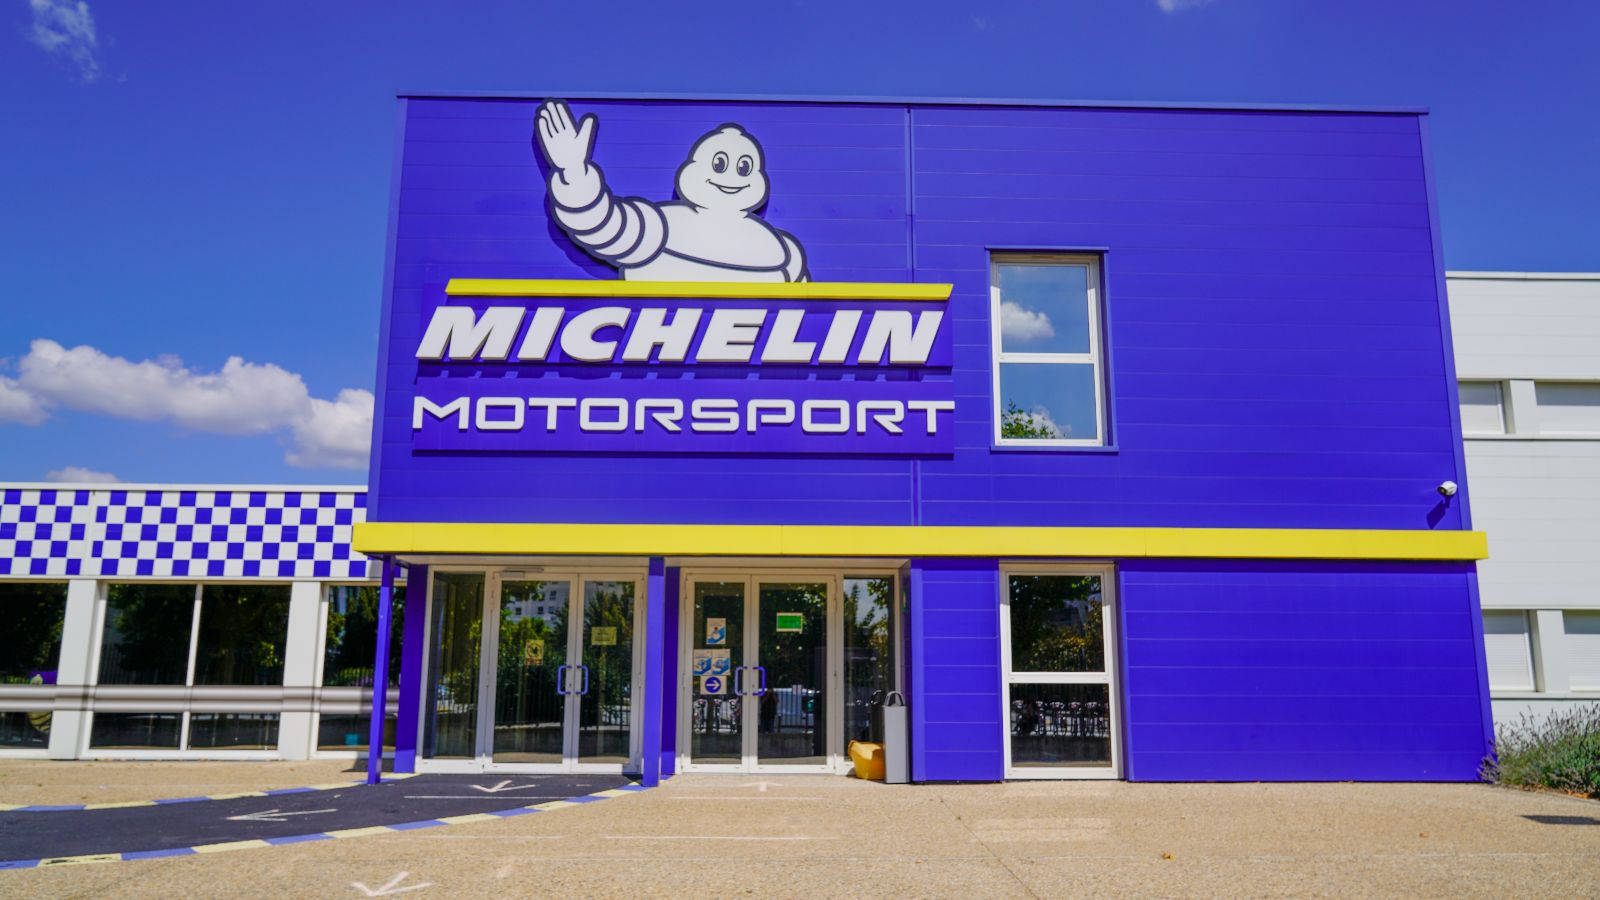 Michelinmotorsport Gebäude. Wallpaper